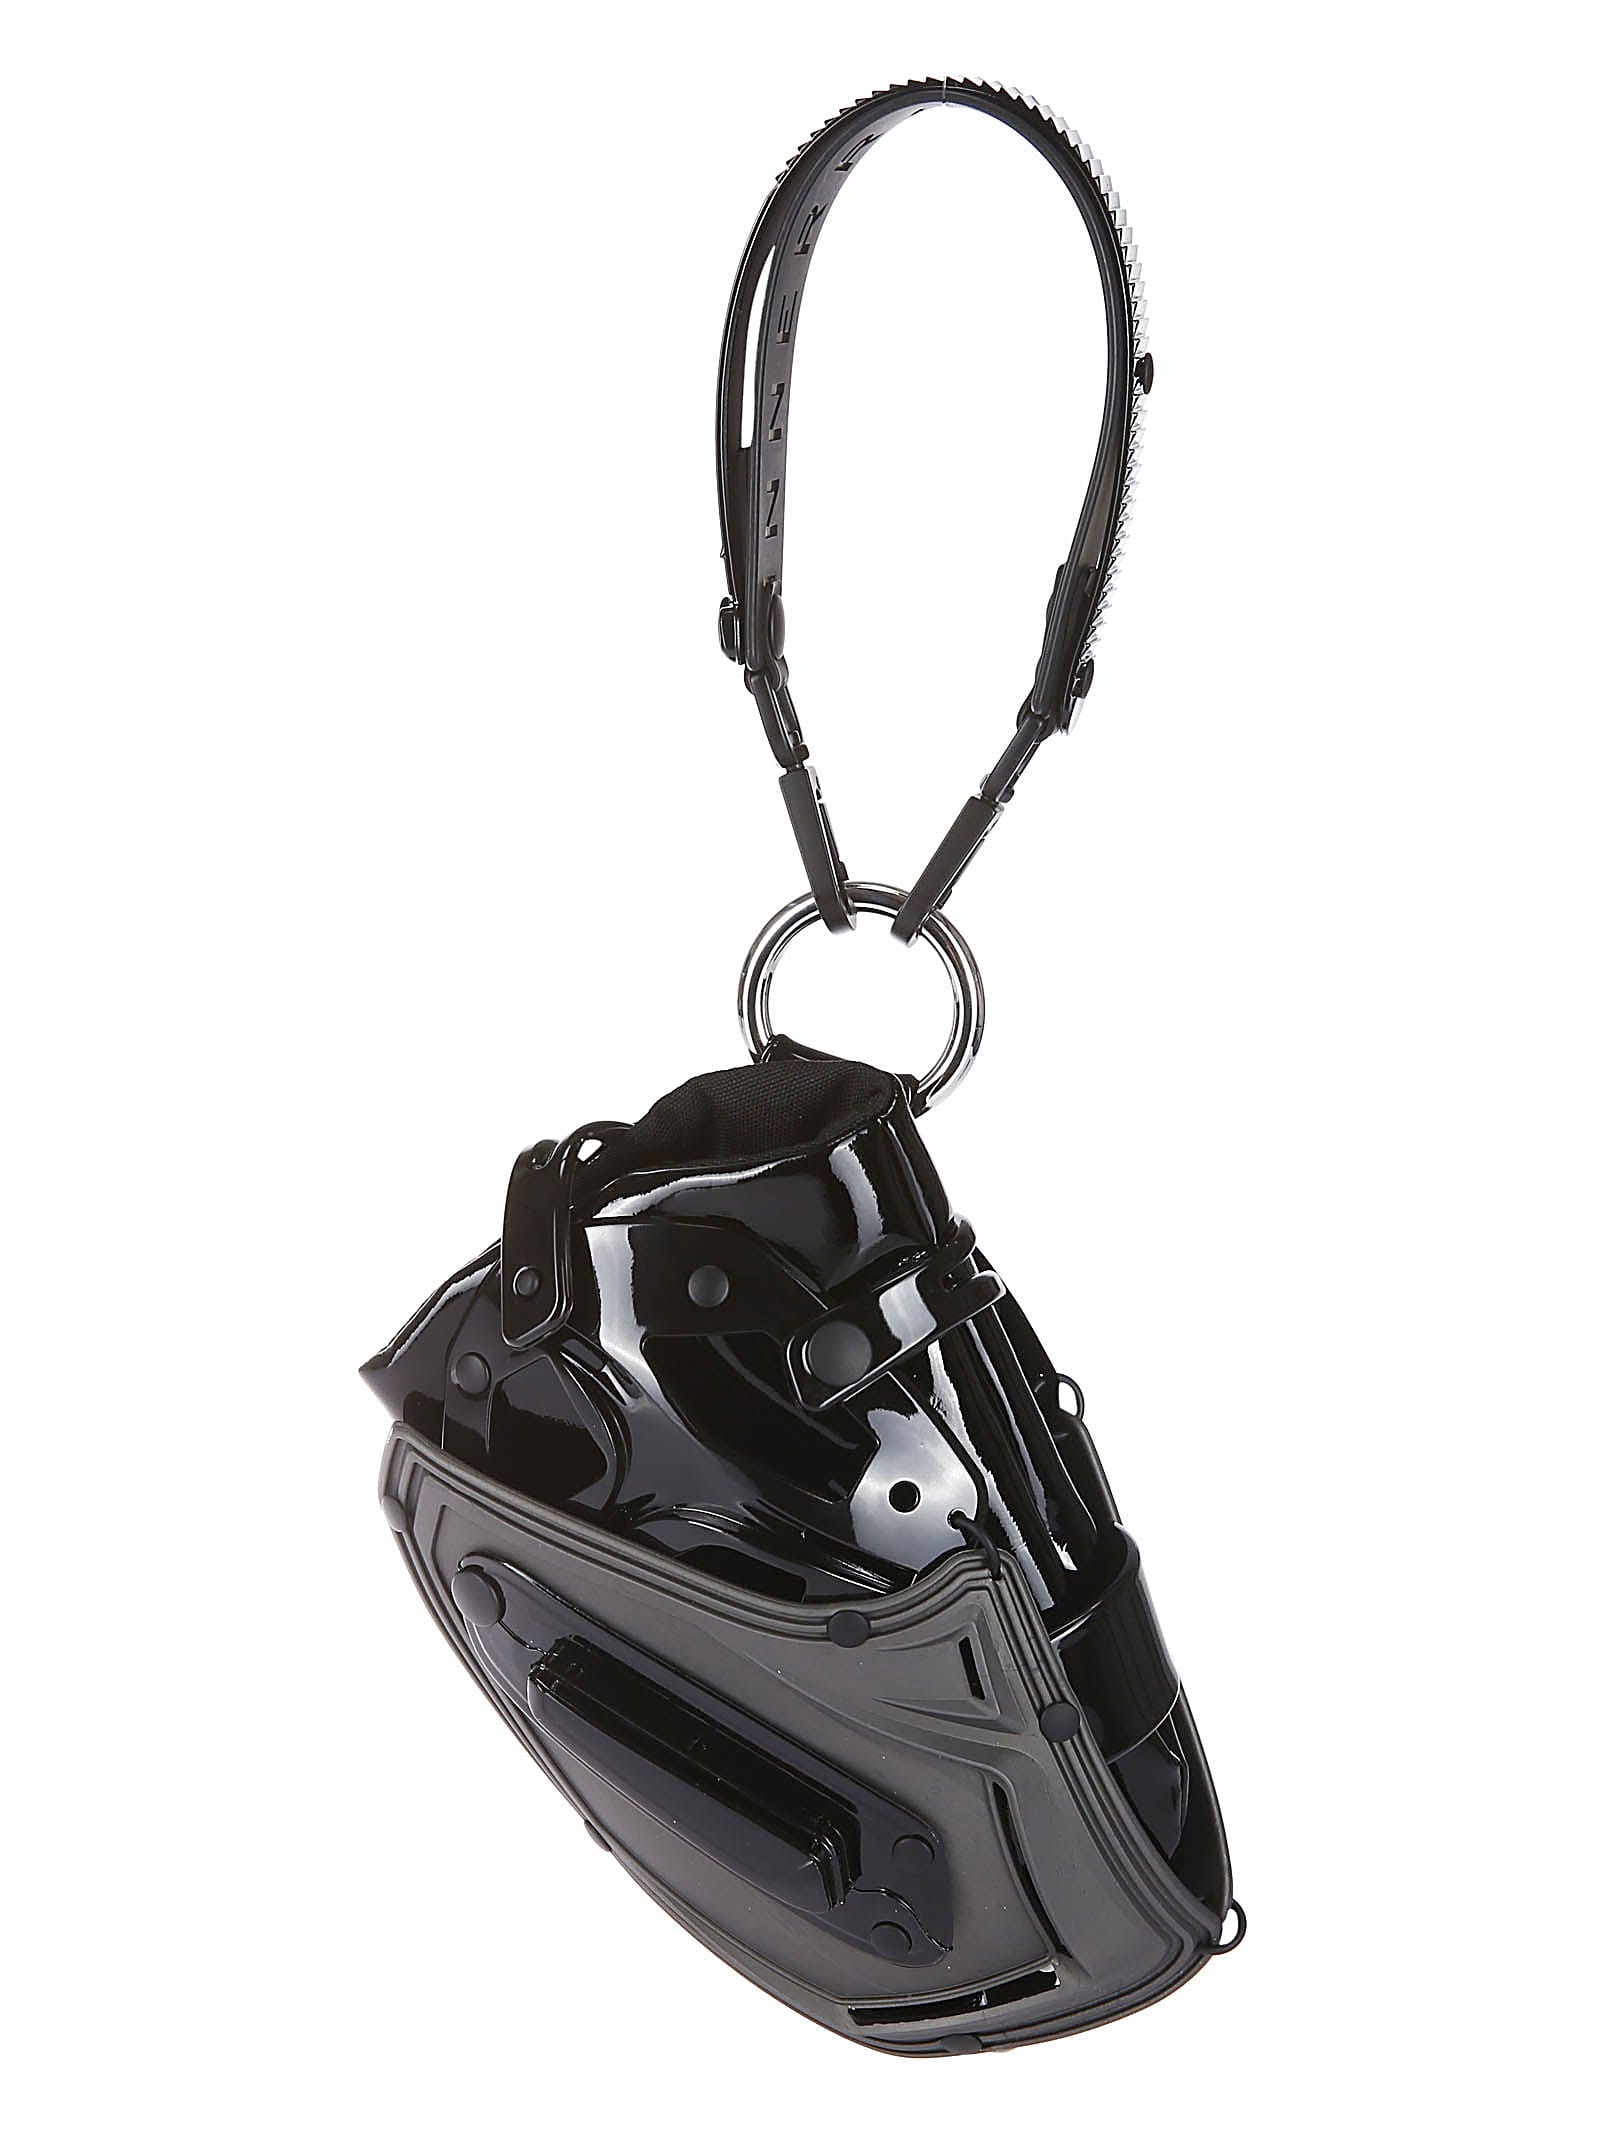 Innerraum Object I51 Wristlet Phone Bag